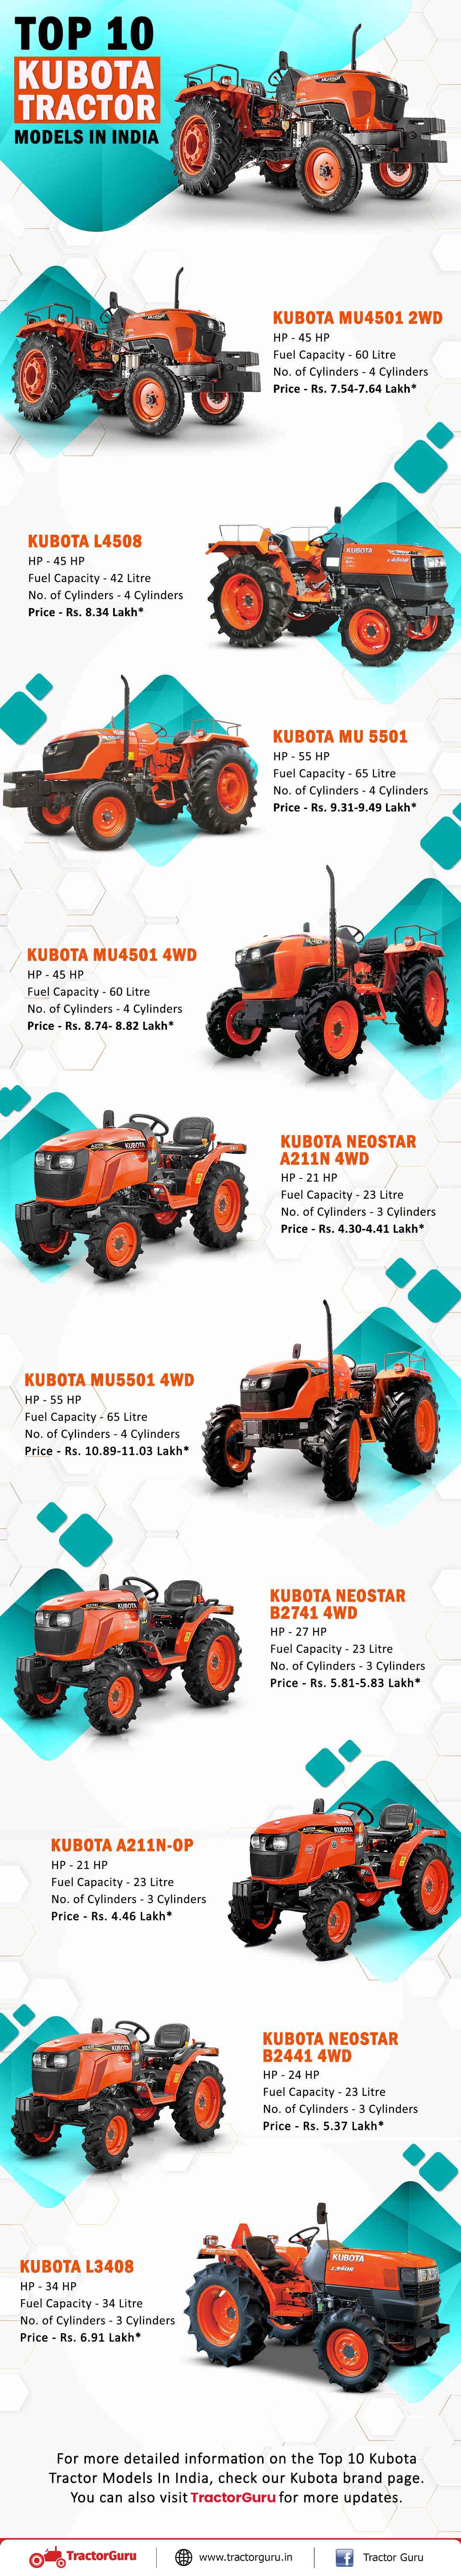 Top 10 Kubota Tractor Models In India